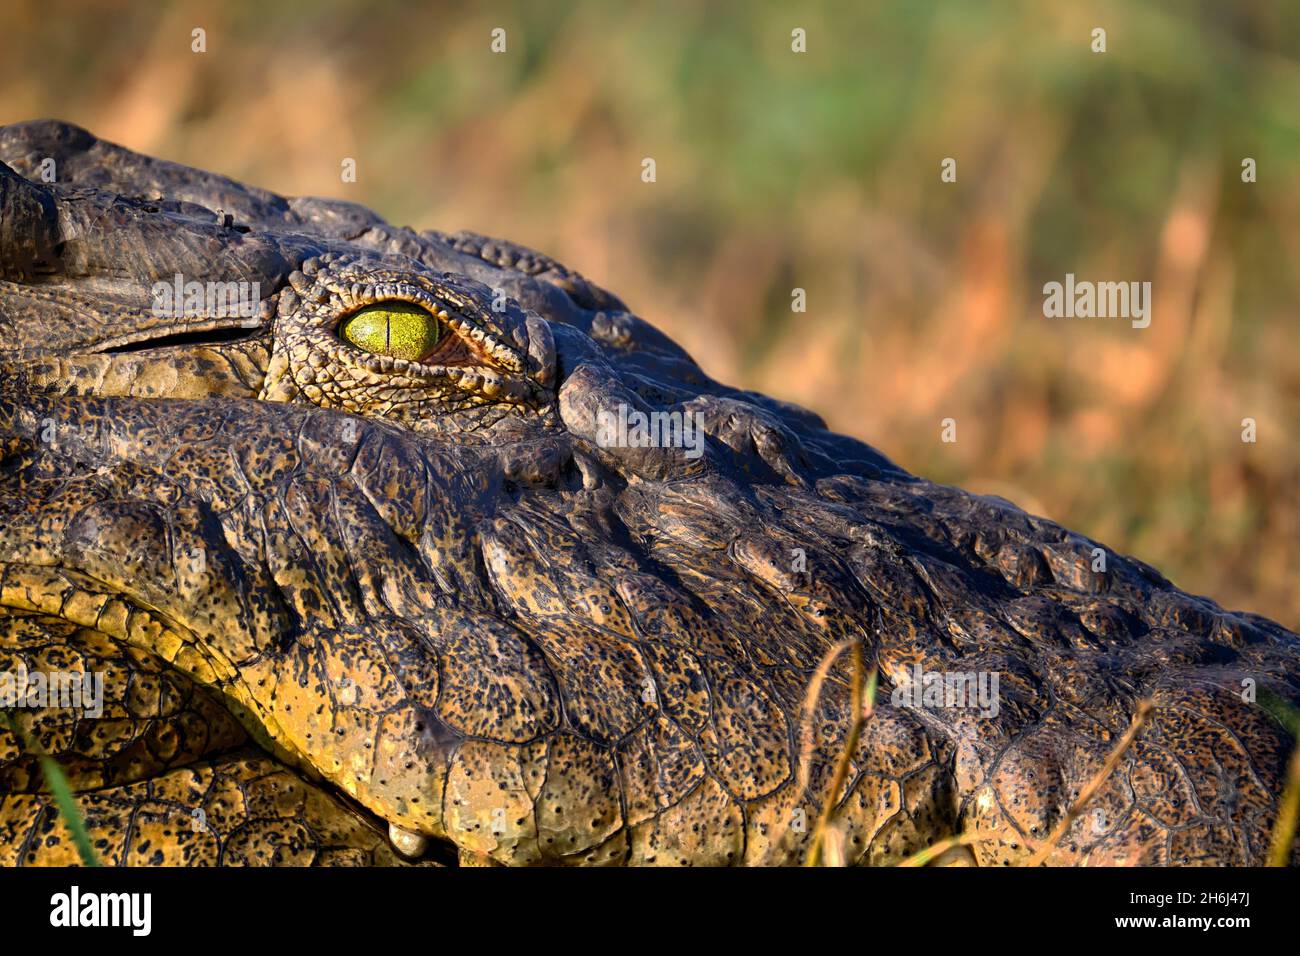 Nile crocodile (Crocodylus niloticus) closeup of the reptile's eye. Chobe National Park, Botswana, Africa Stock Photo